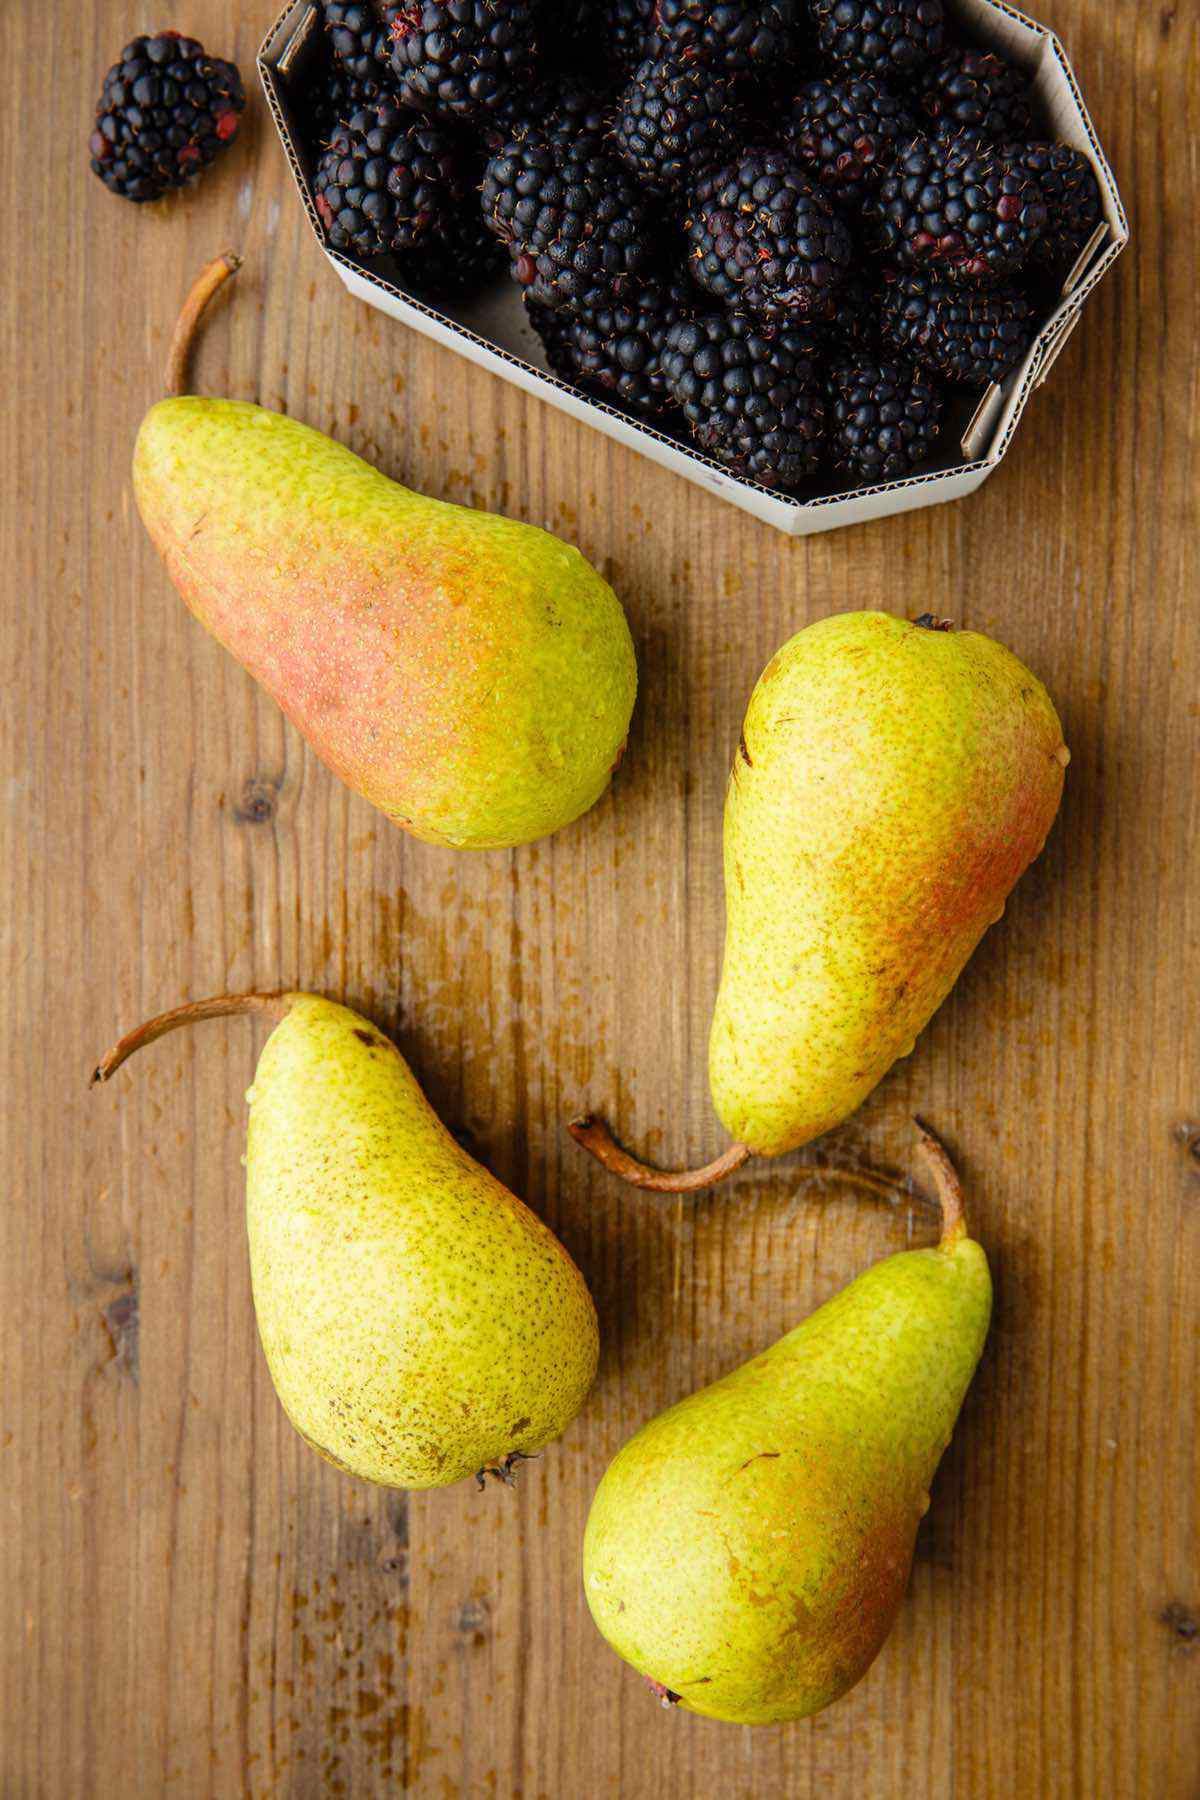 Pear and Blackberry Cobbler (A Cozy Paleo Dessert Staple) | Paleo Grubs